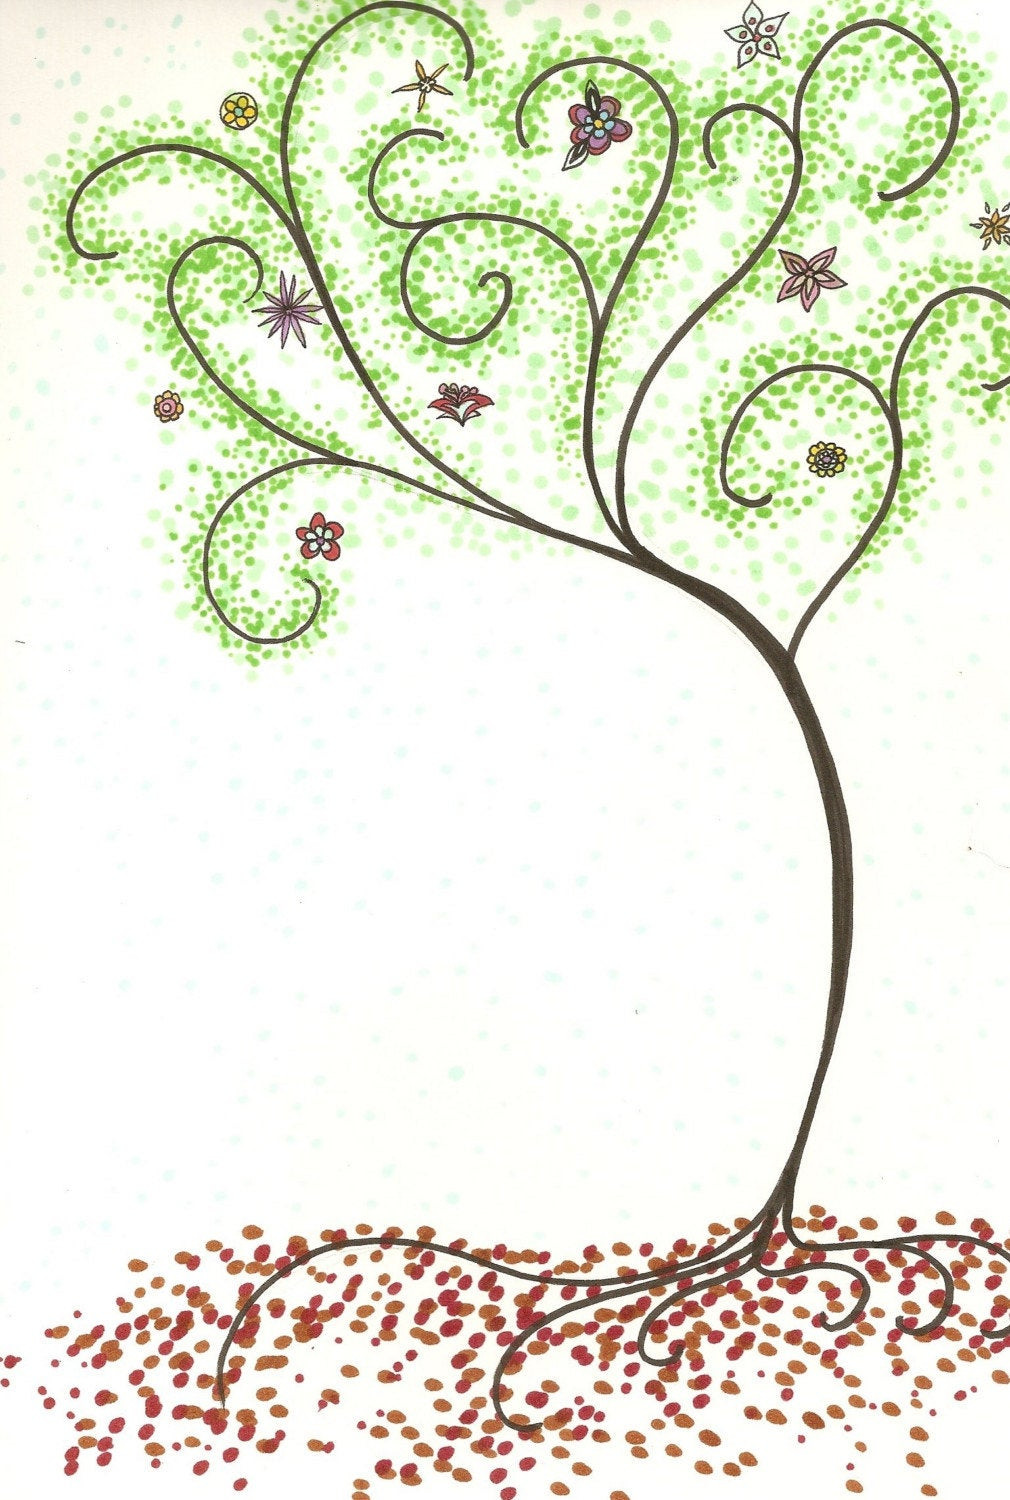 Spring Ideas Drawing
 Dot Art Spring Tree Original 9x12 drawing by shadowglacier